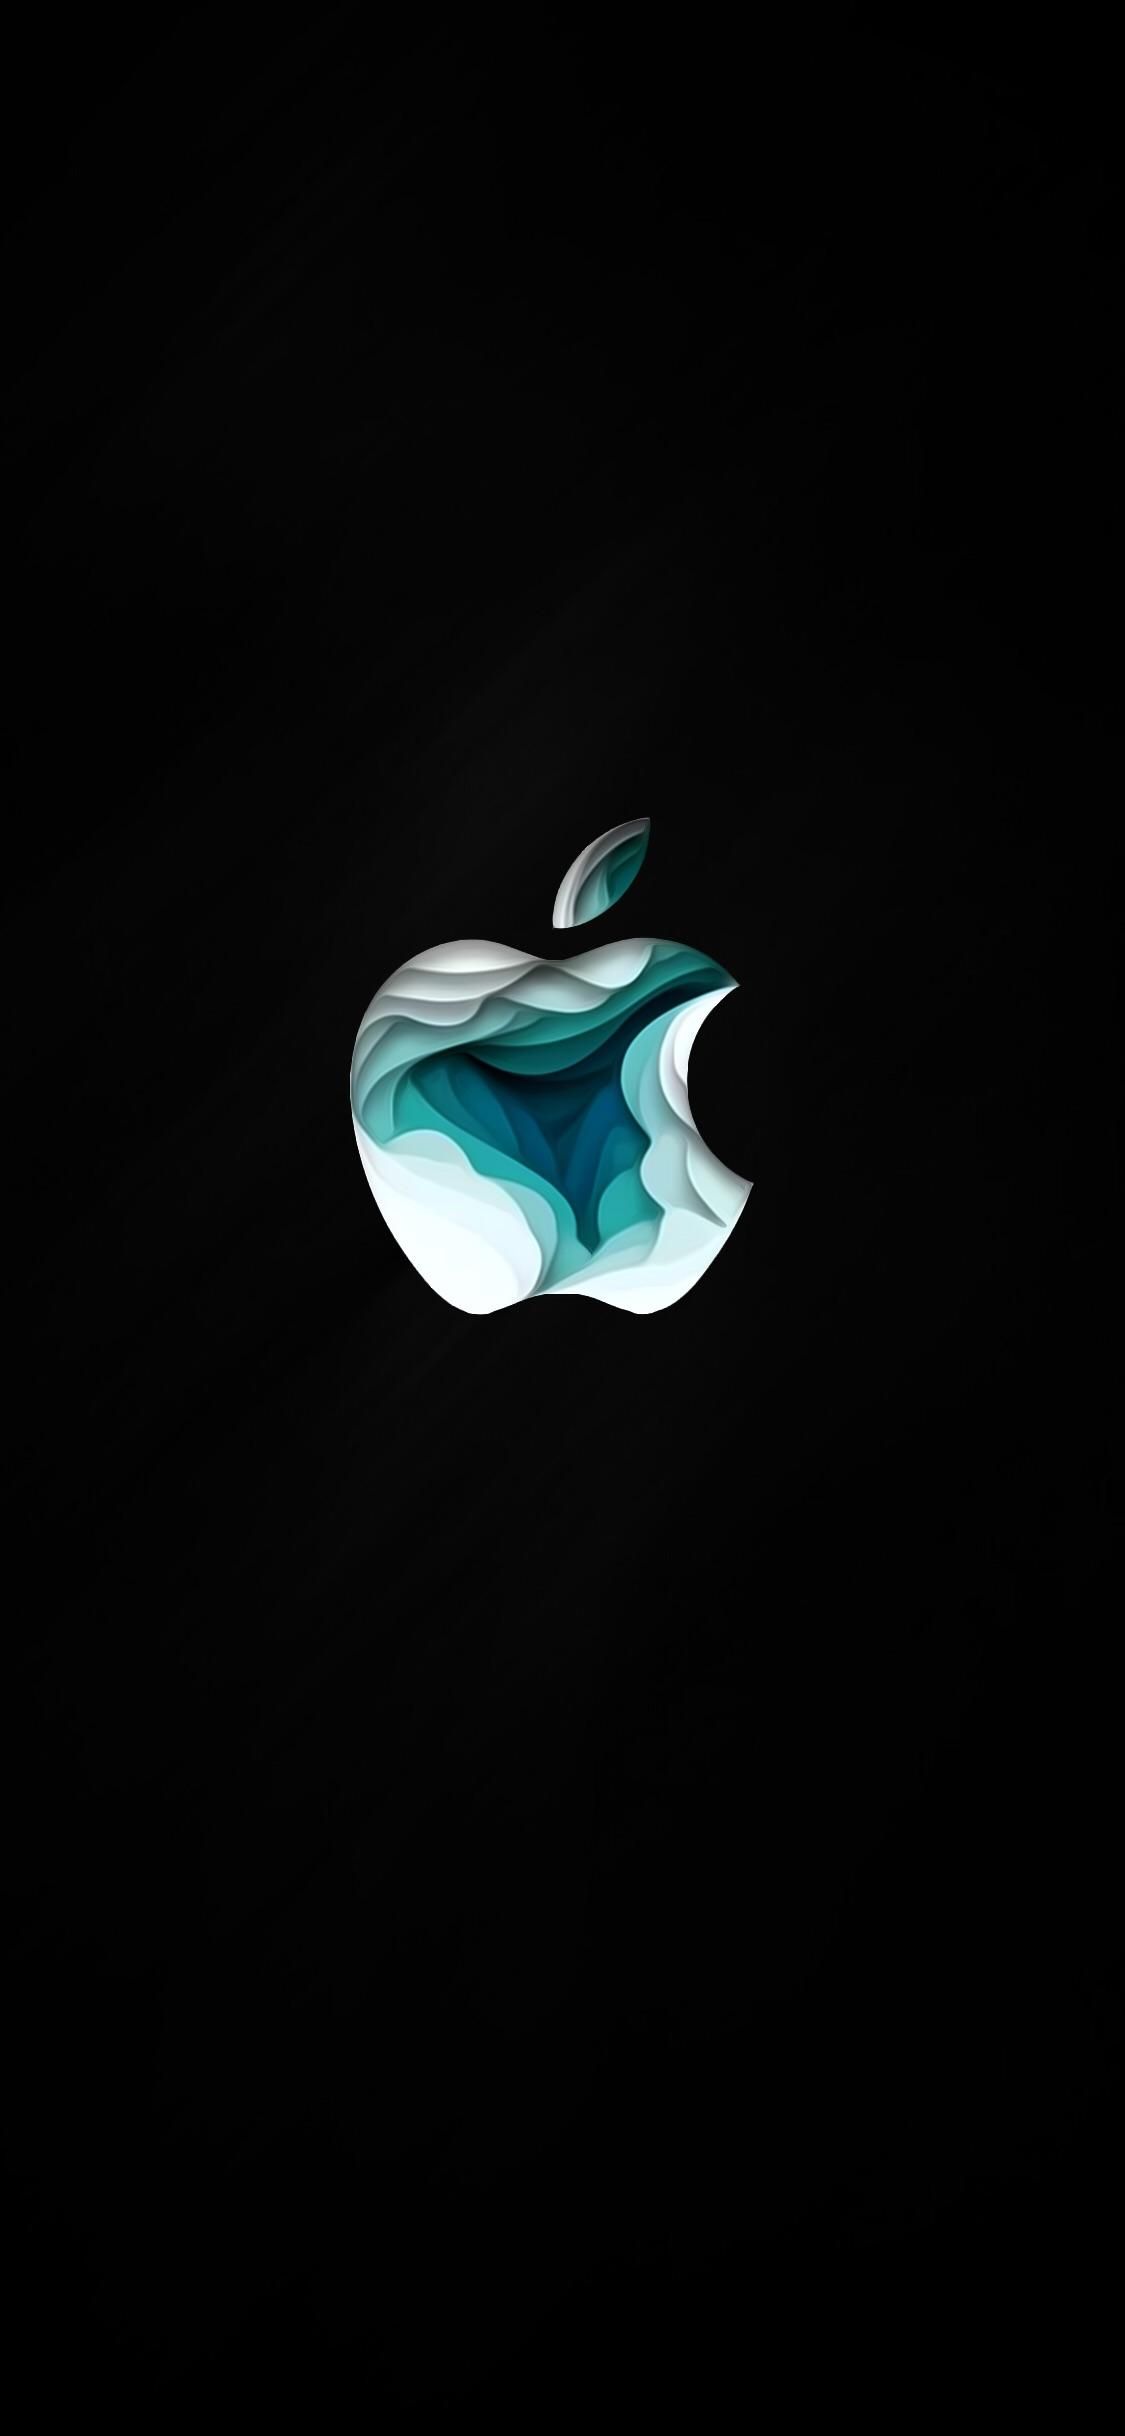 iPhone Logo Wallpaper Free iPhone Logo Background